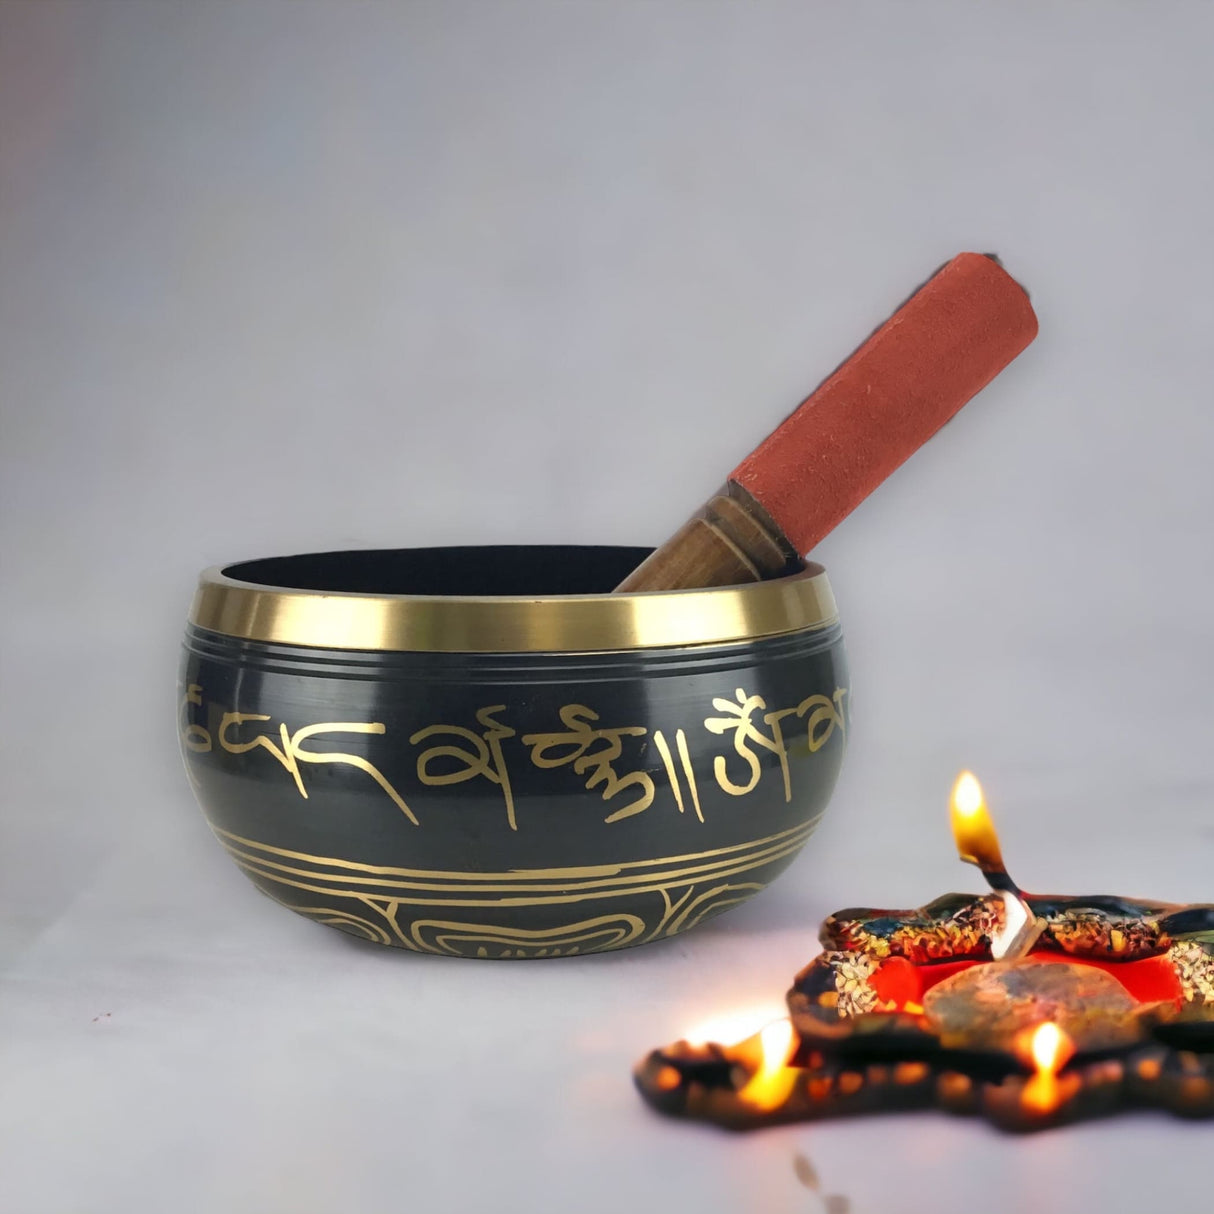 Indian tibetan meditation singing bowl set decorative round